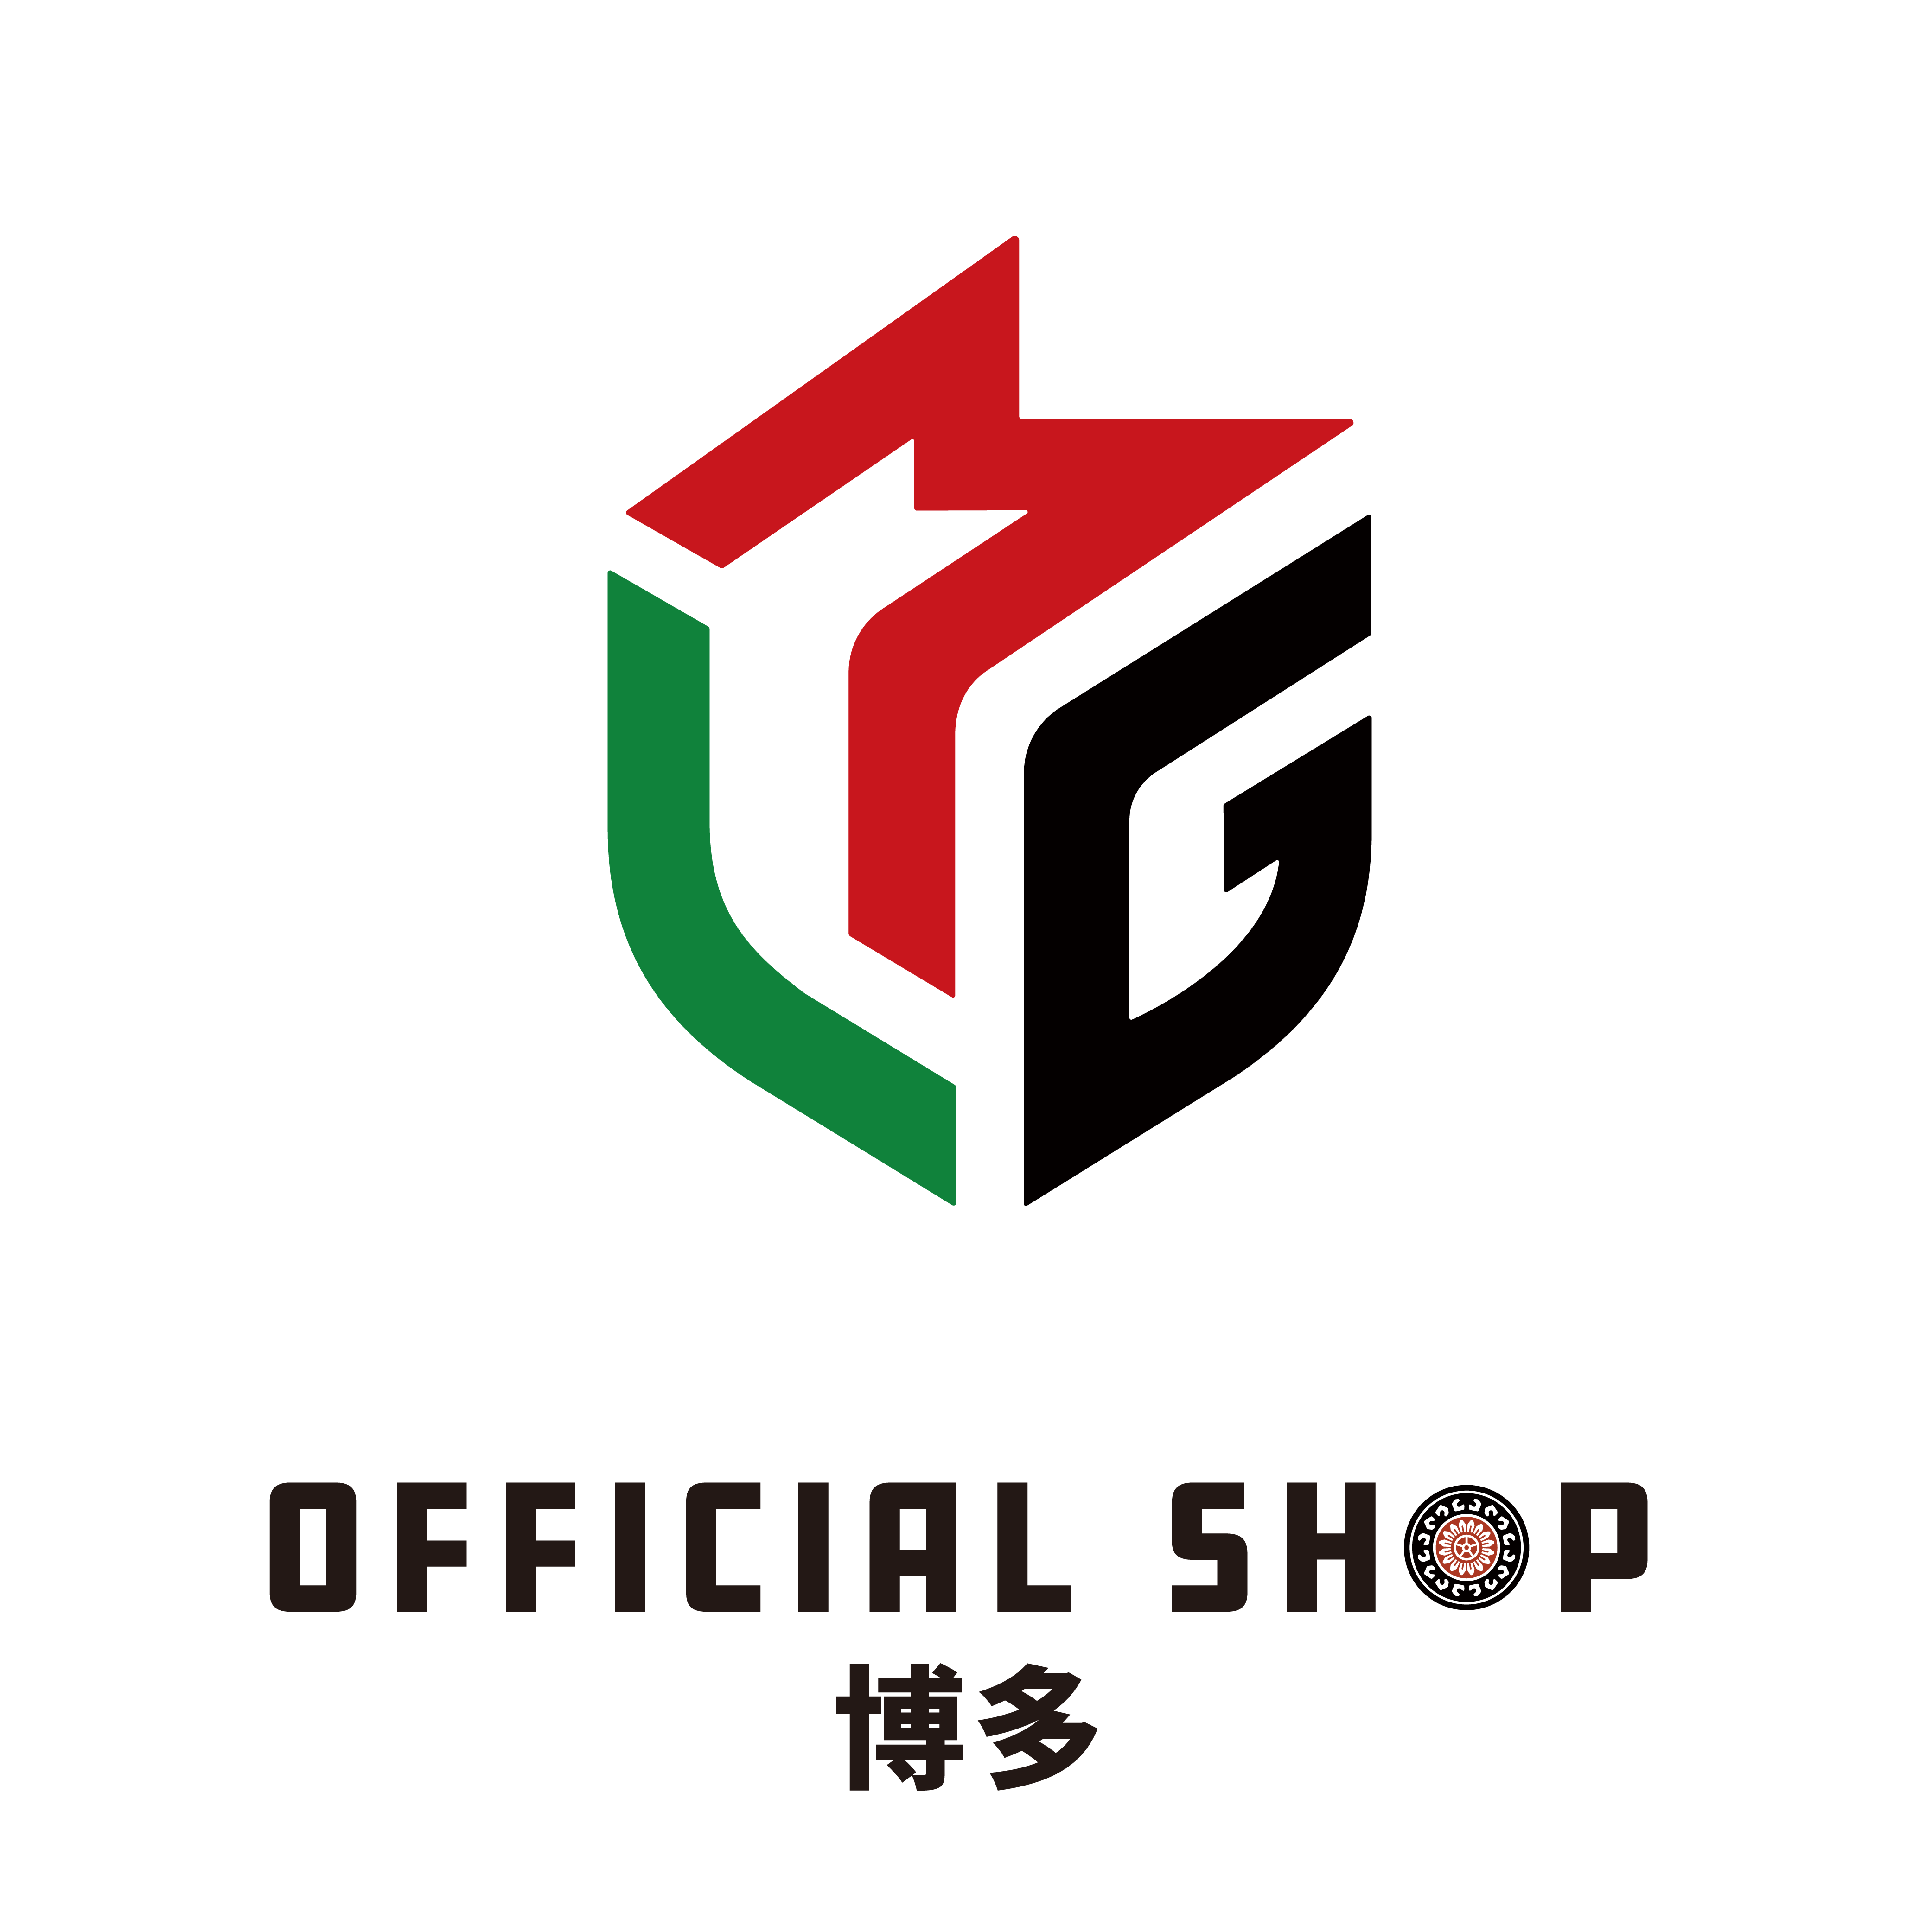 M.LEAGUE OFFICIAL SHOP博多 新店舗オープンのお知らせ